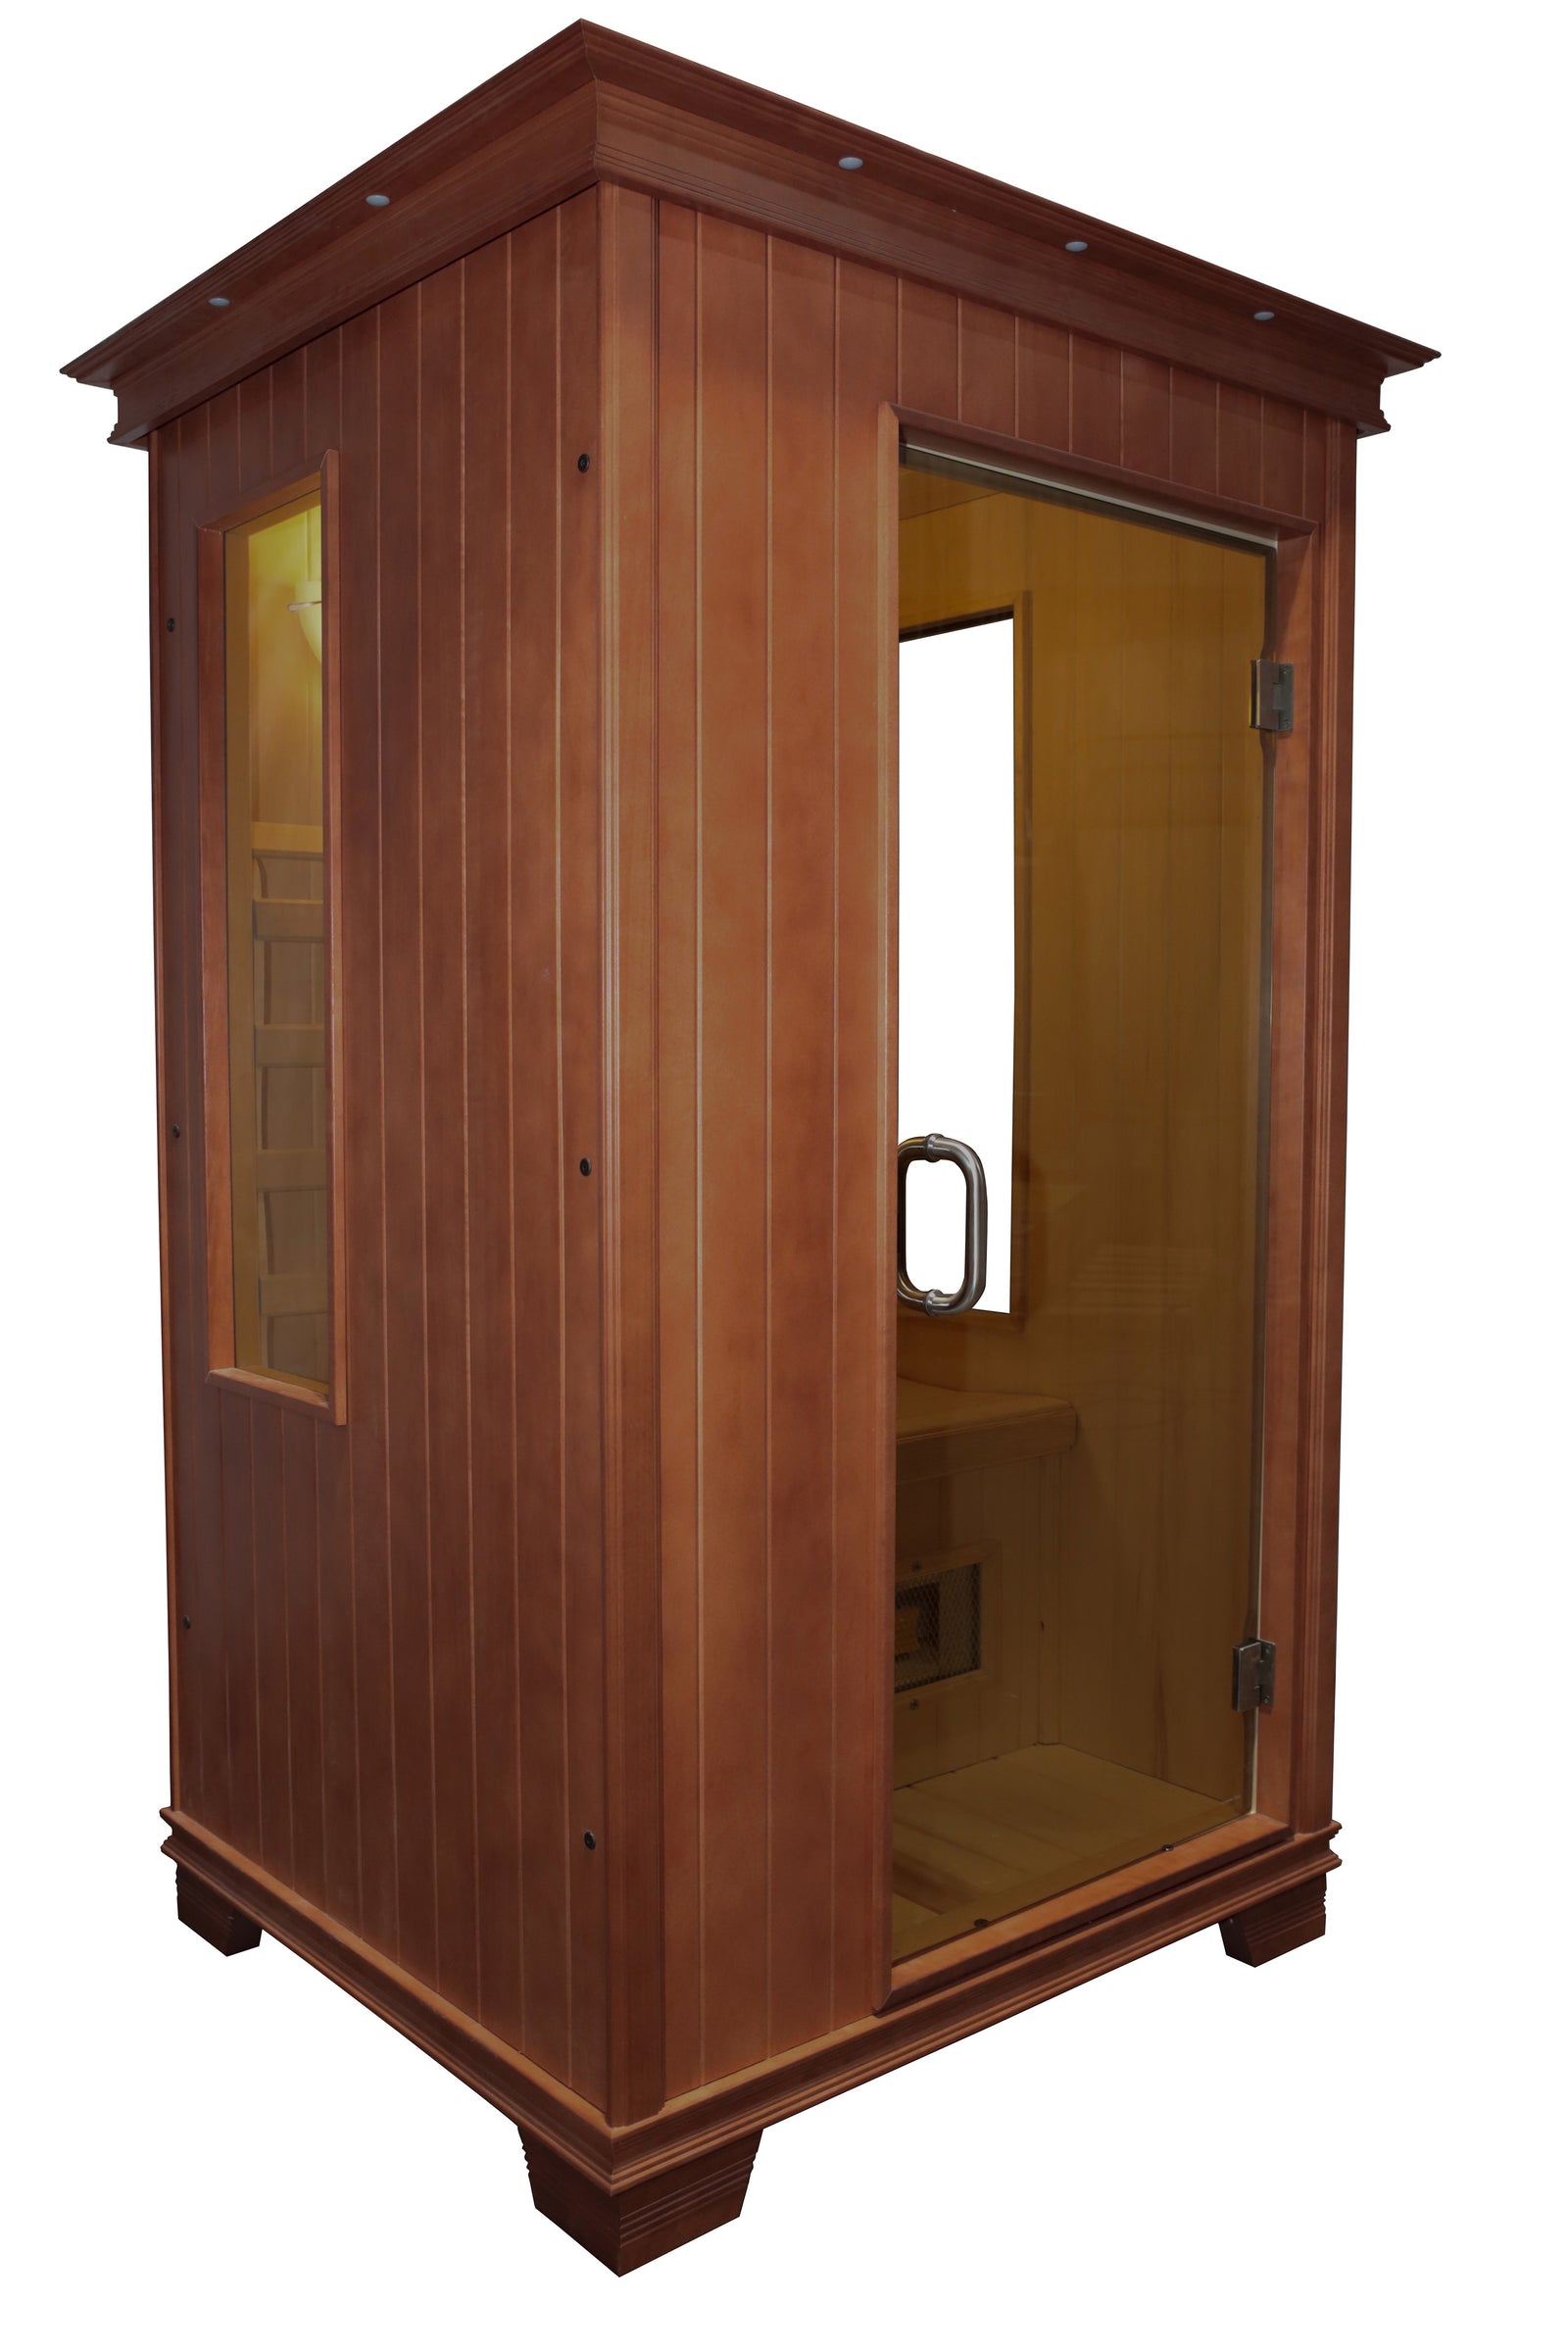 1 Person Sauna - Nordica Sauna